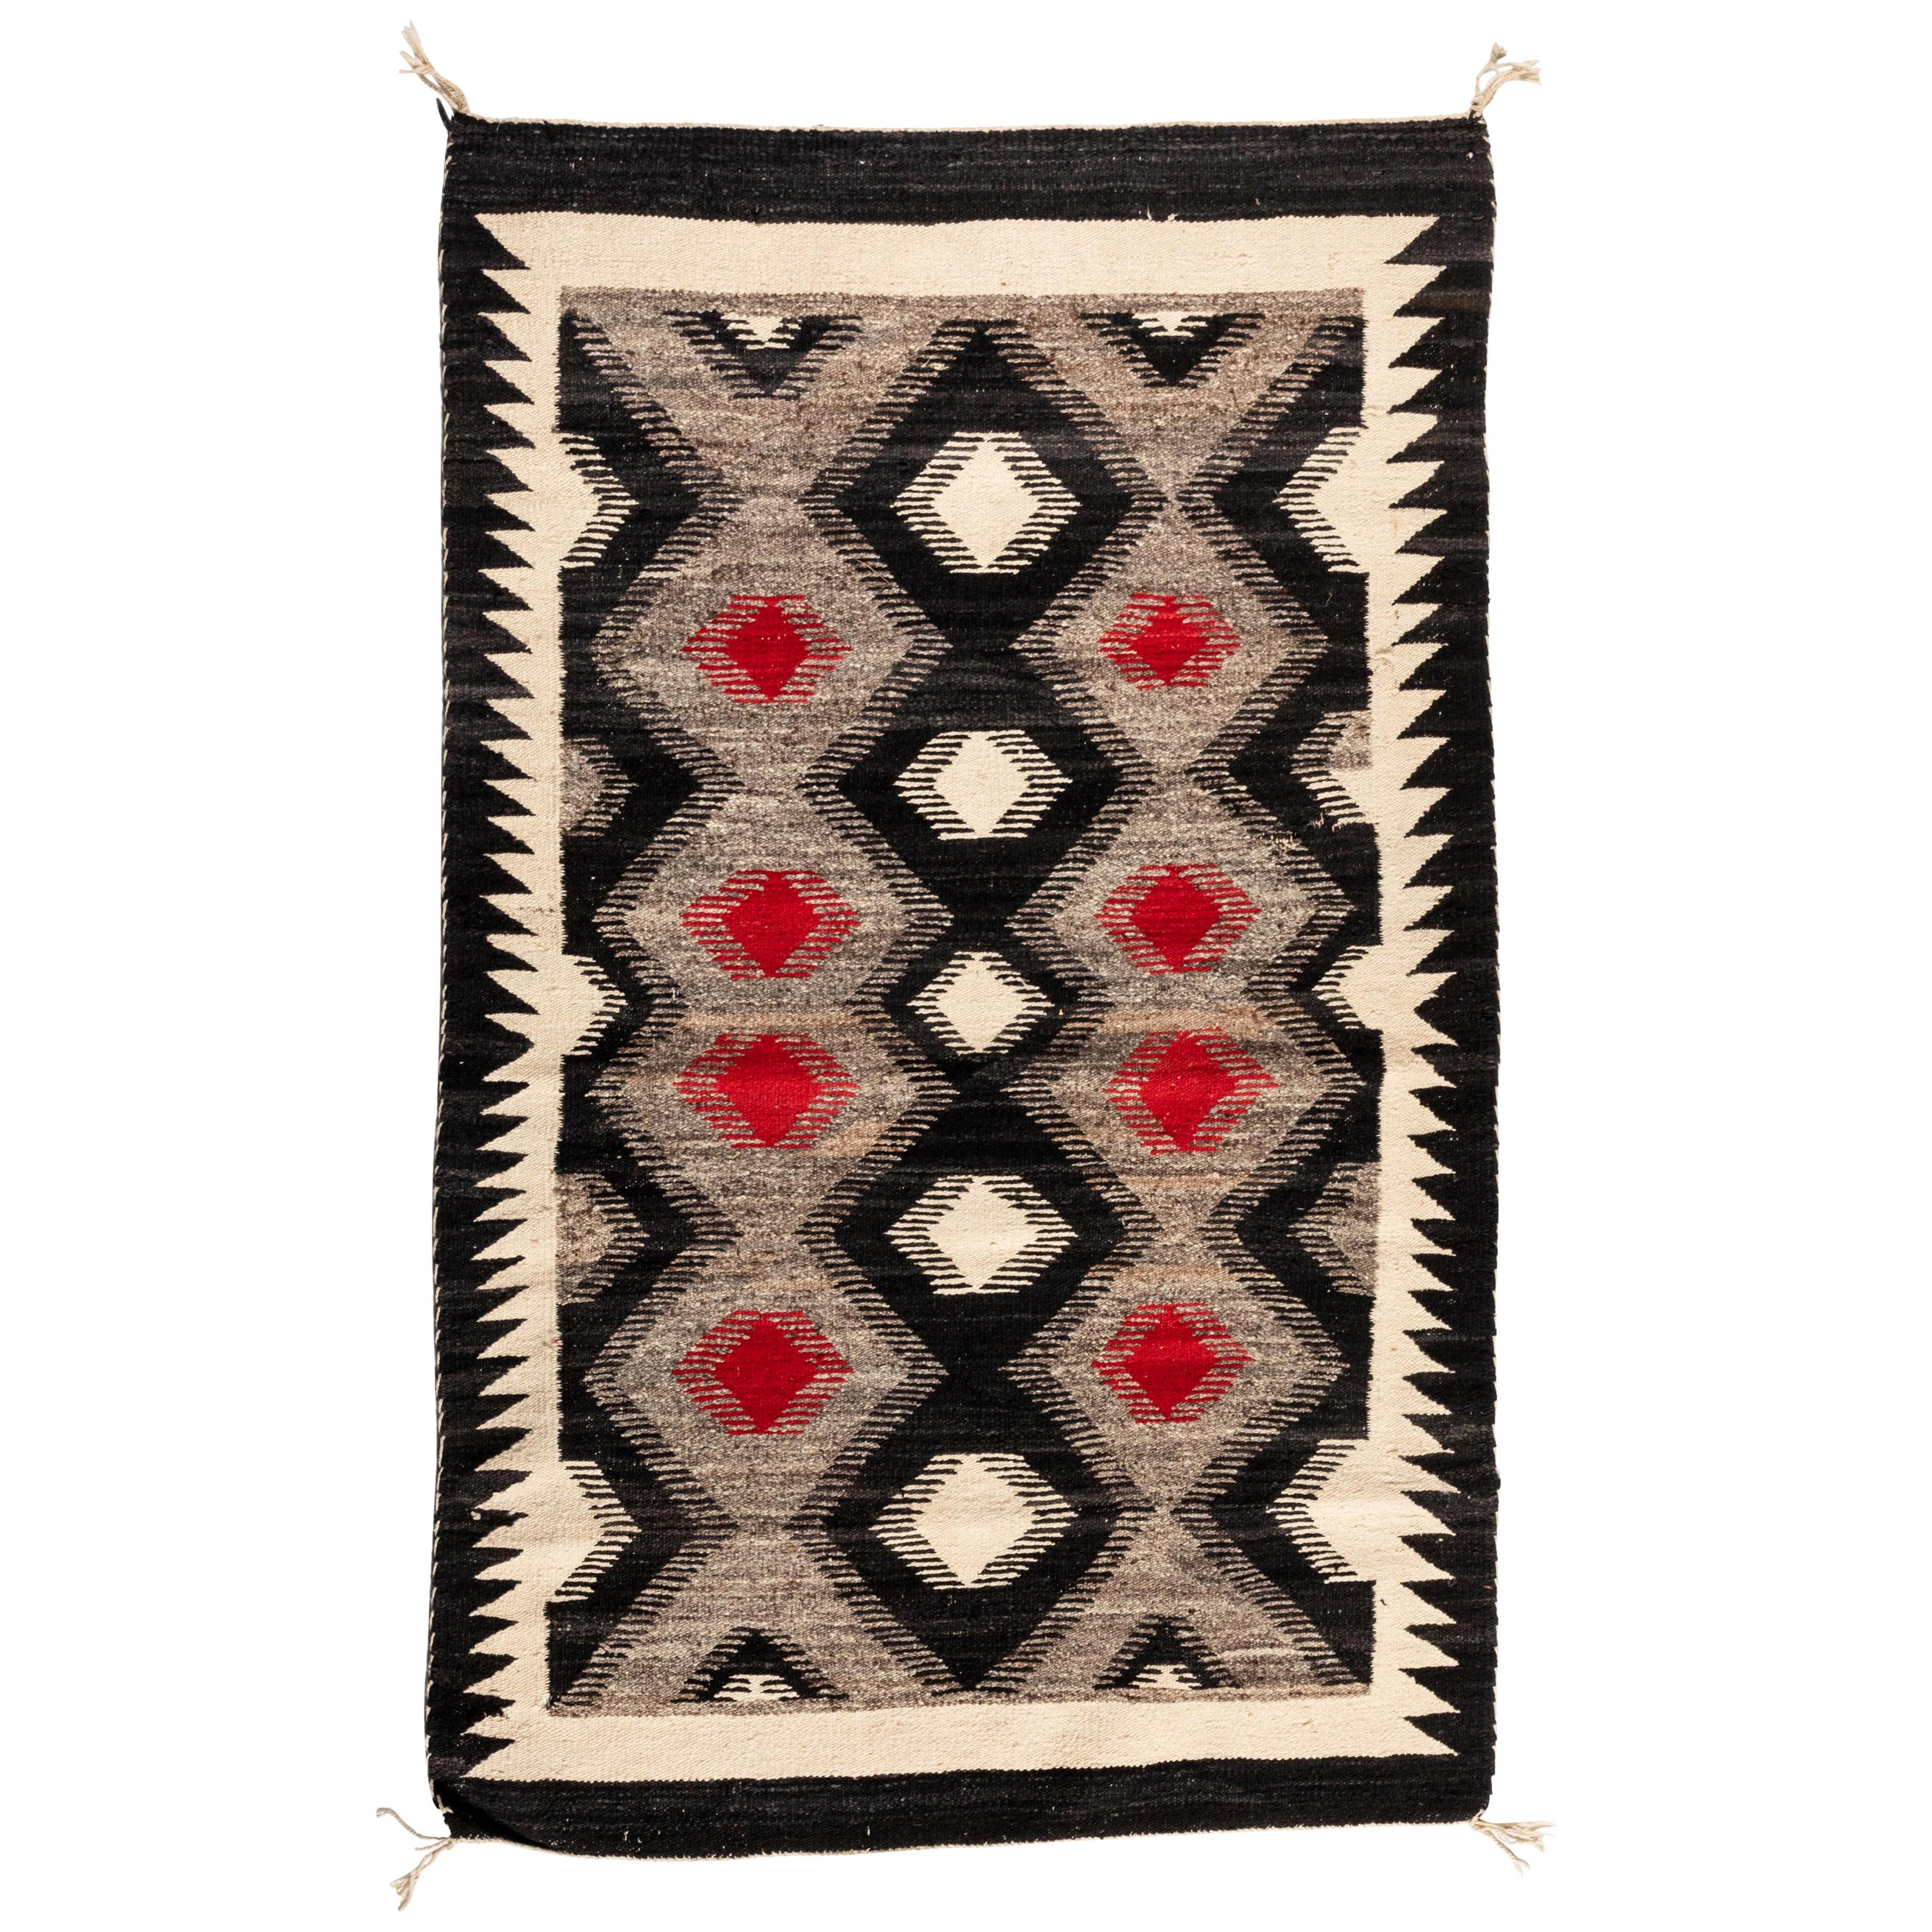 Antique Red Grey Black Geometric Native American Navajo Tribal Rug, circa 1930s